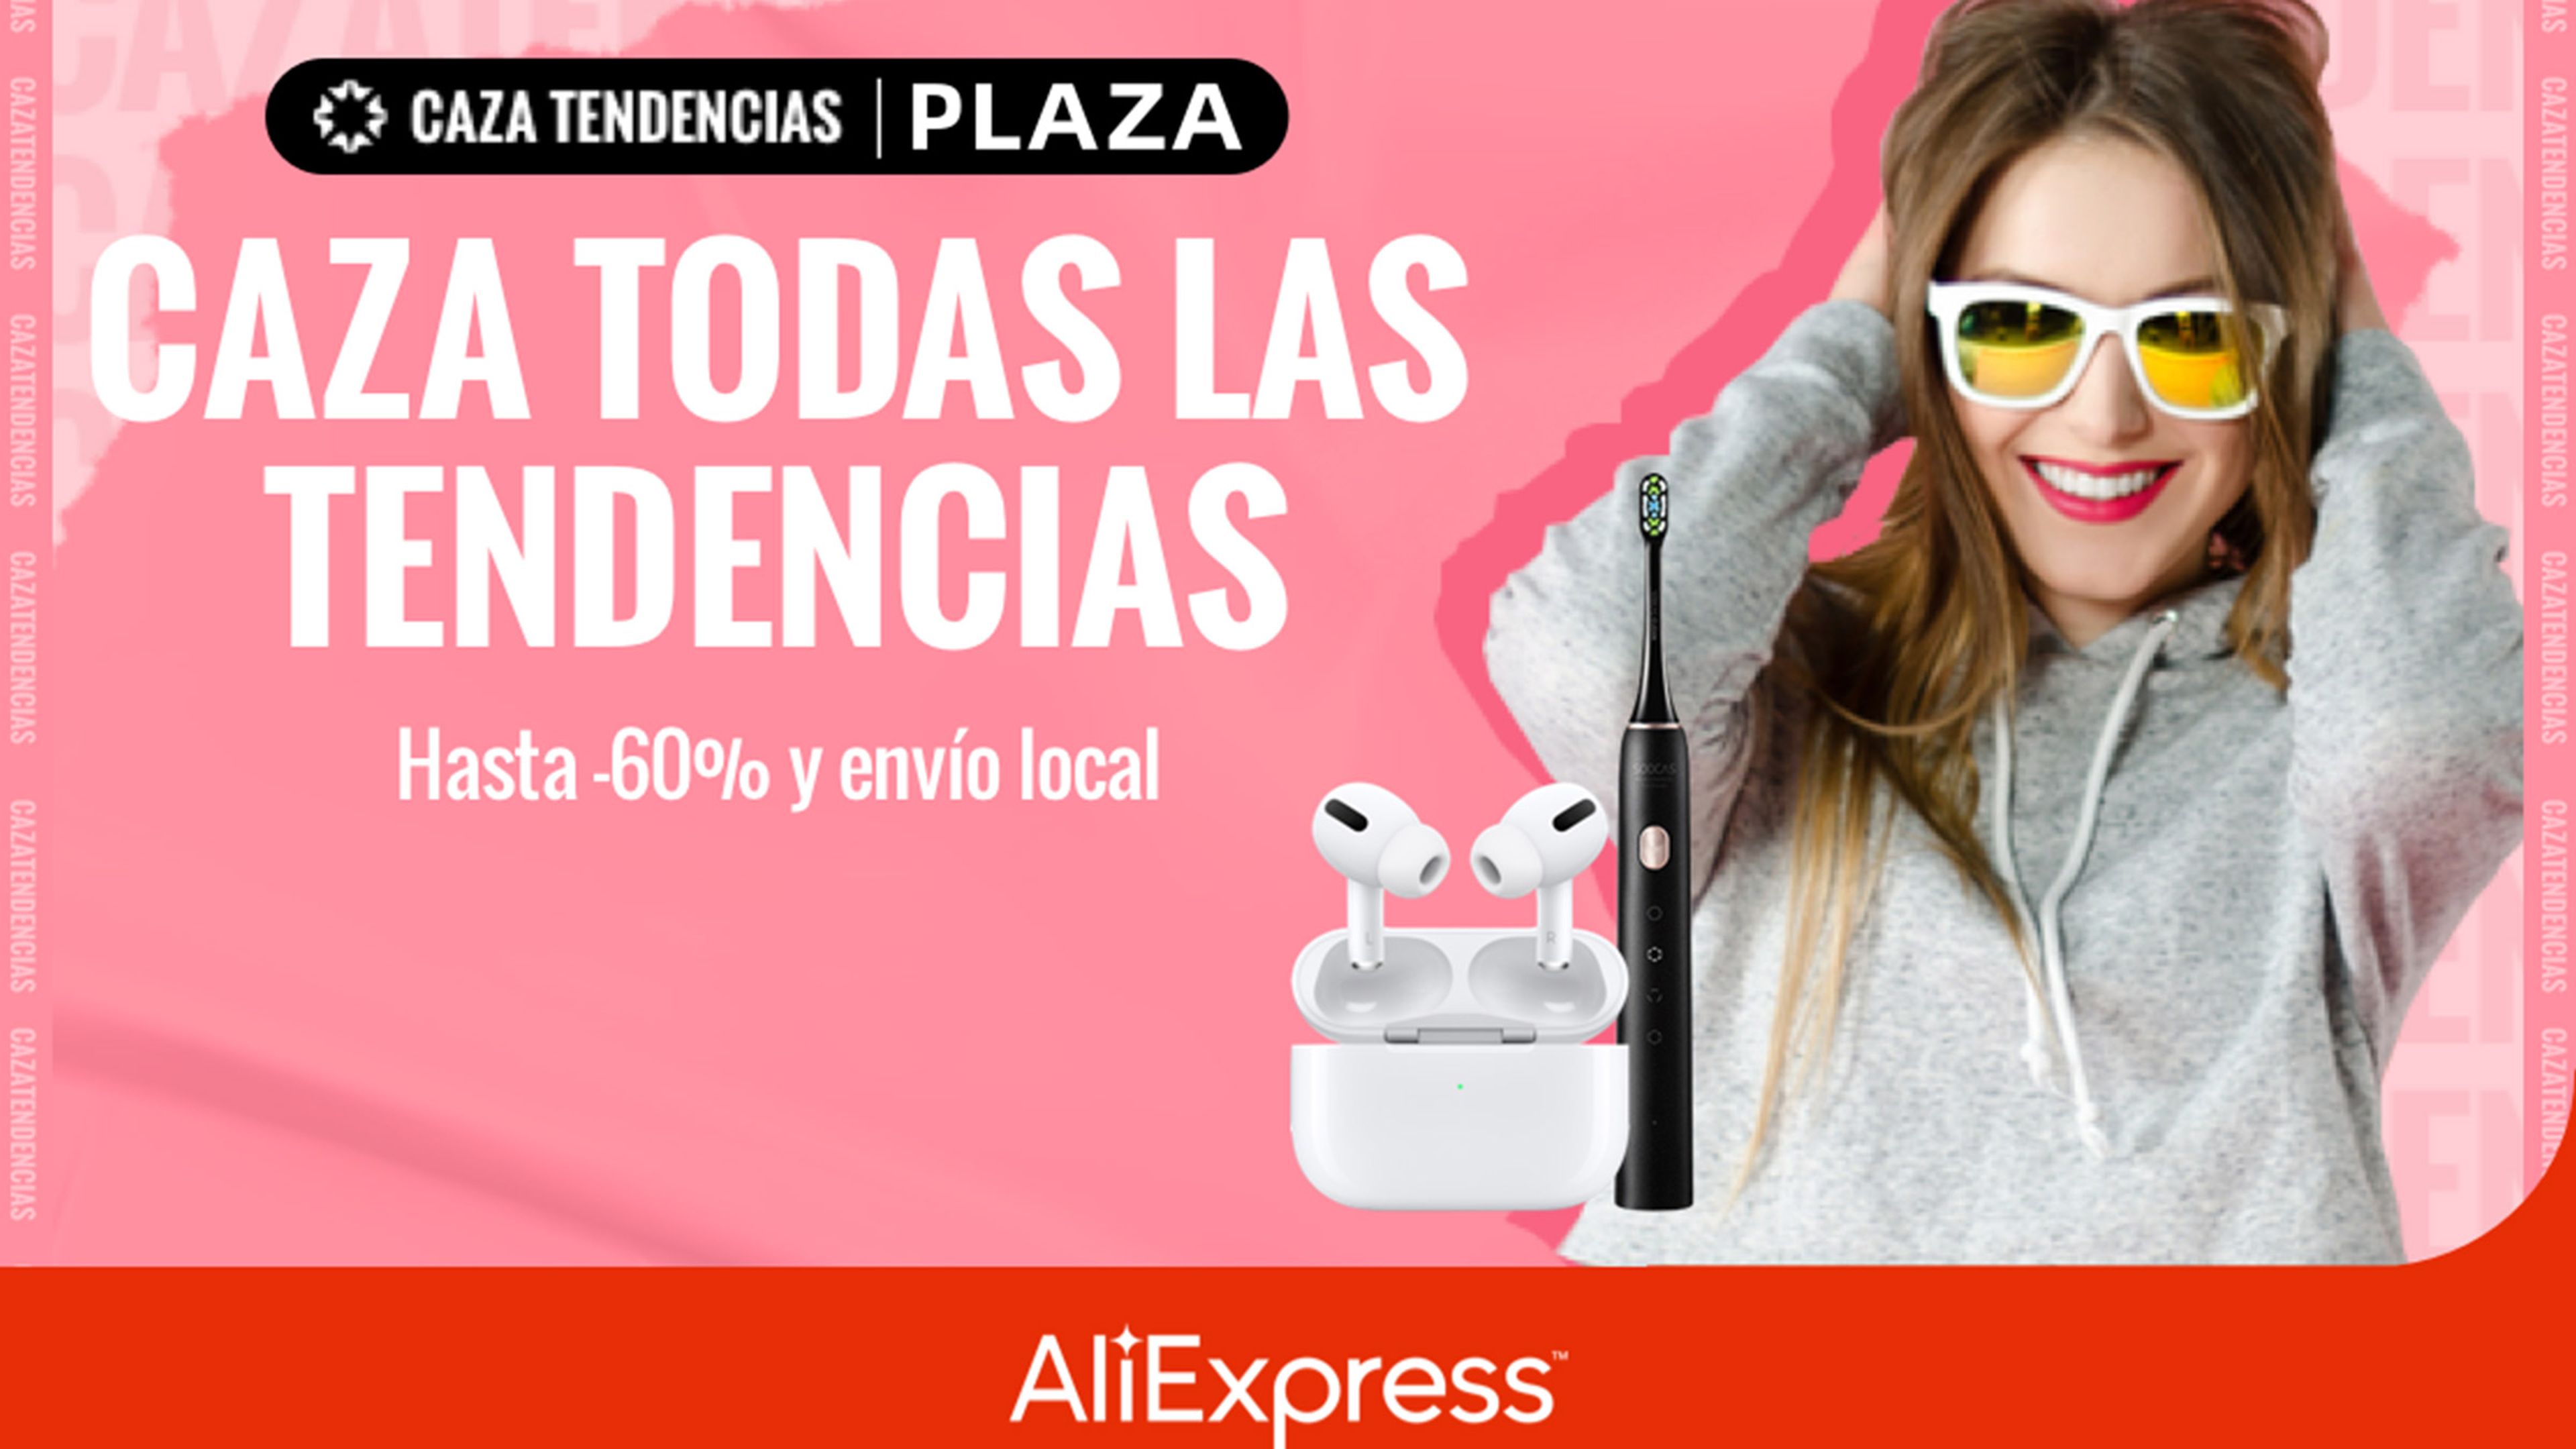 AliExpress Plaza